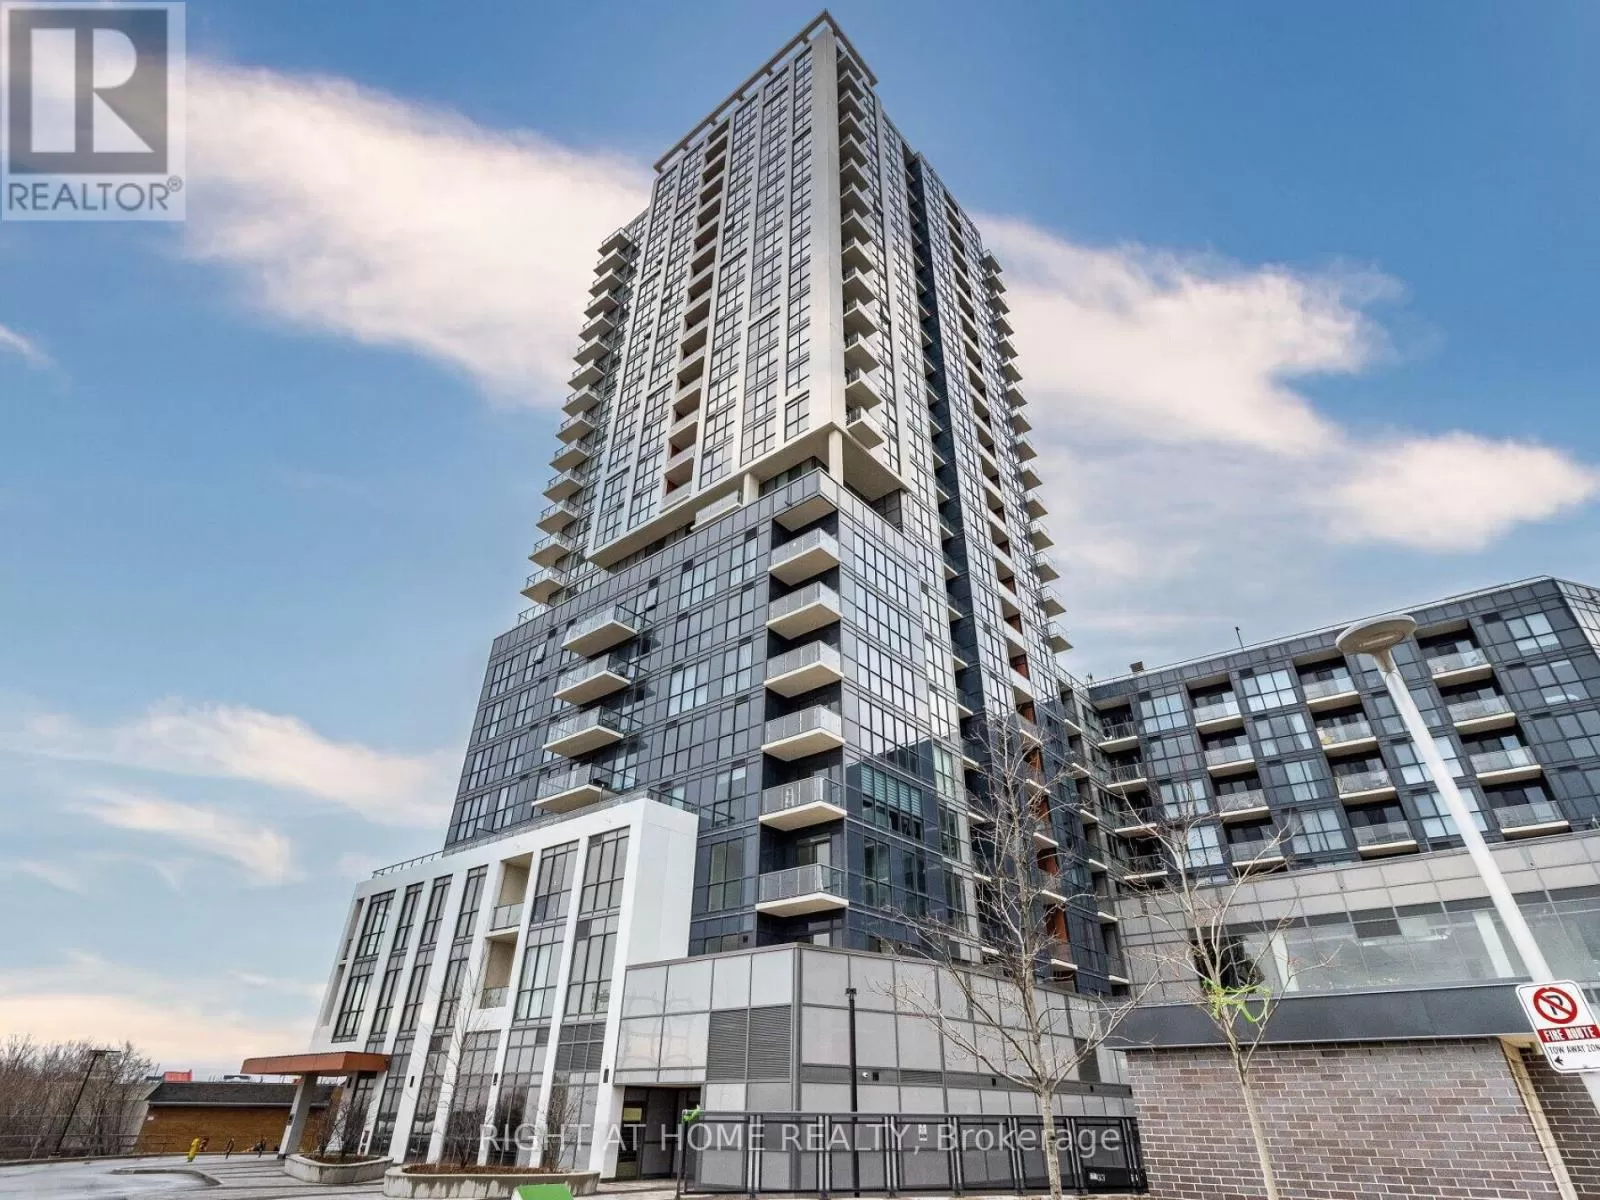 Apartment for rent: 203 - 50 Thomas Riley Road, Toronto, Ontario M9B 0C5